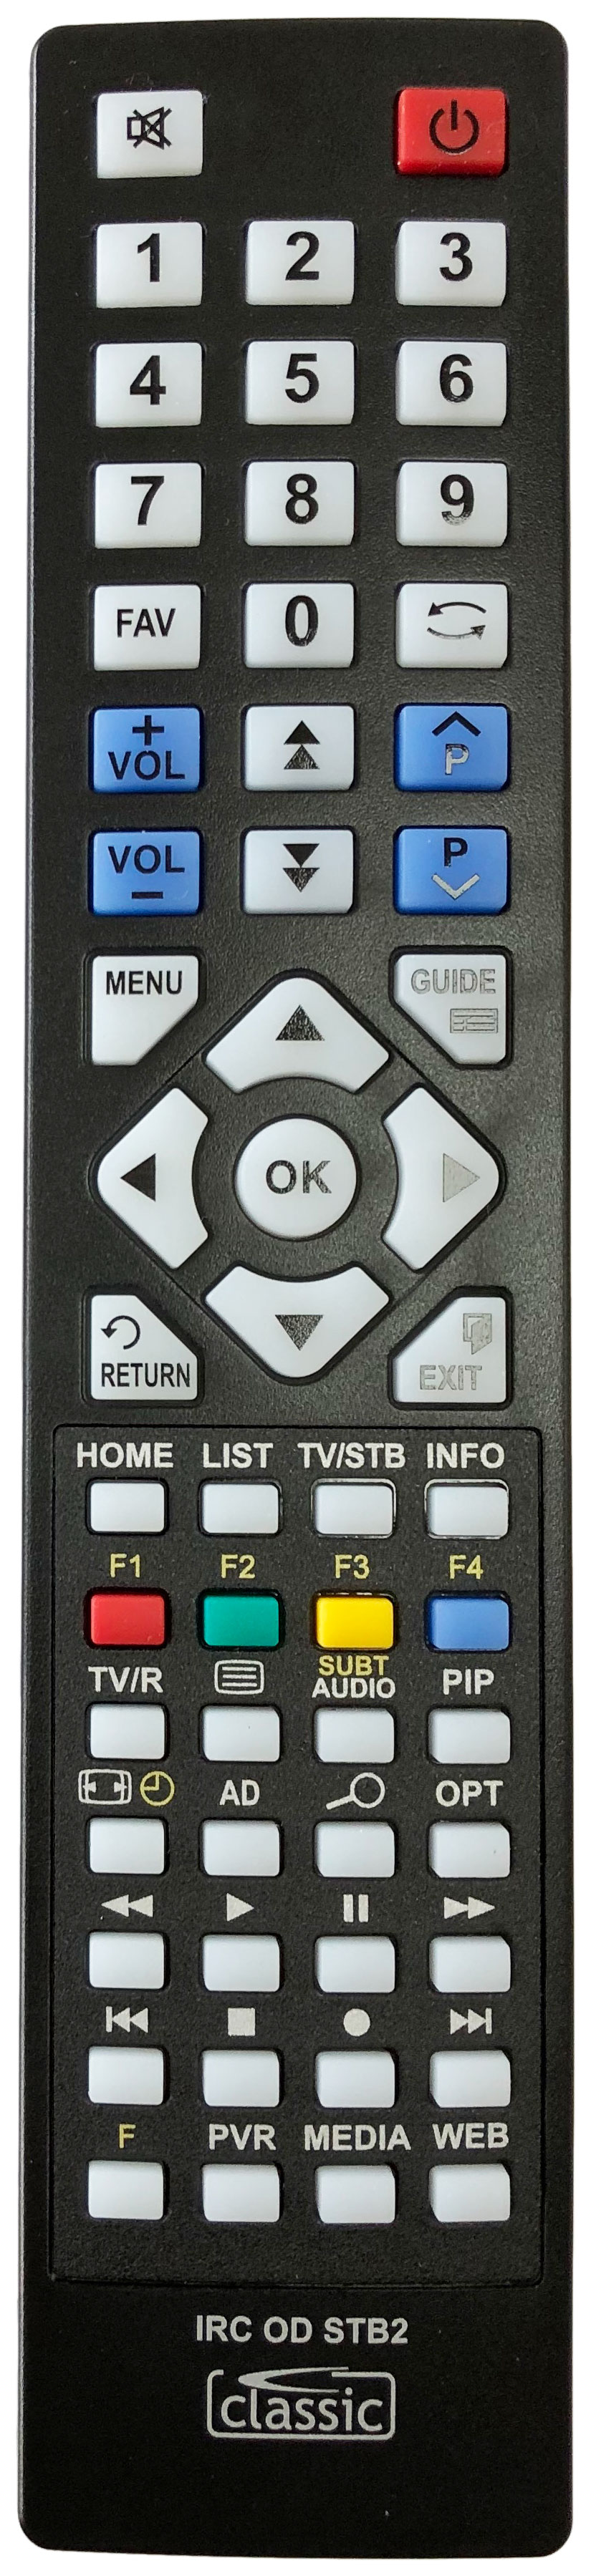 LOGISAT 1300HD Remote Control Alternative